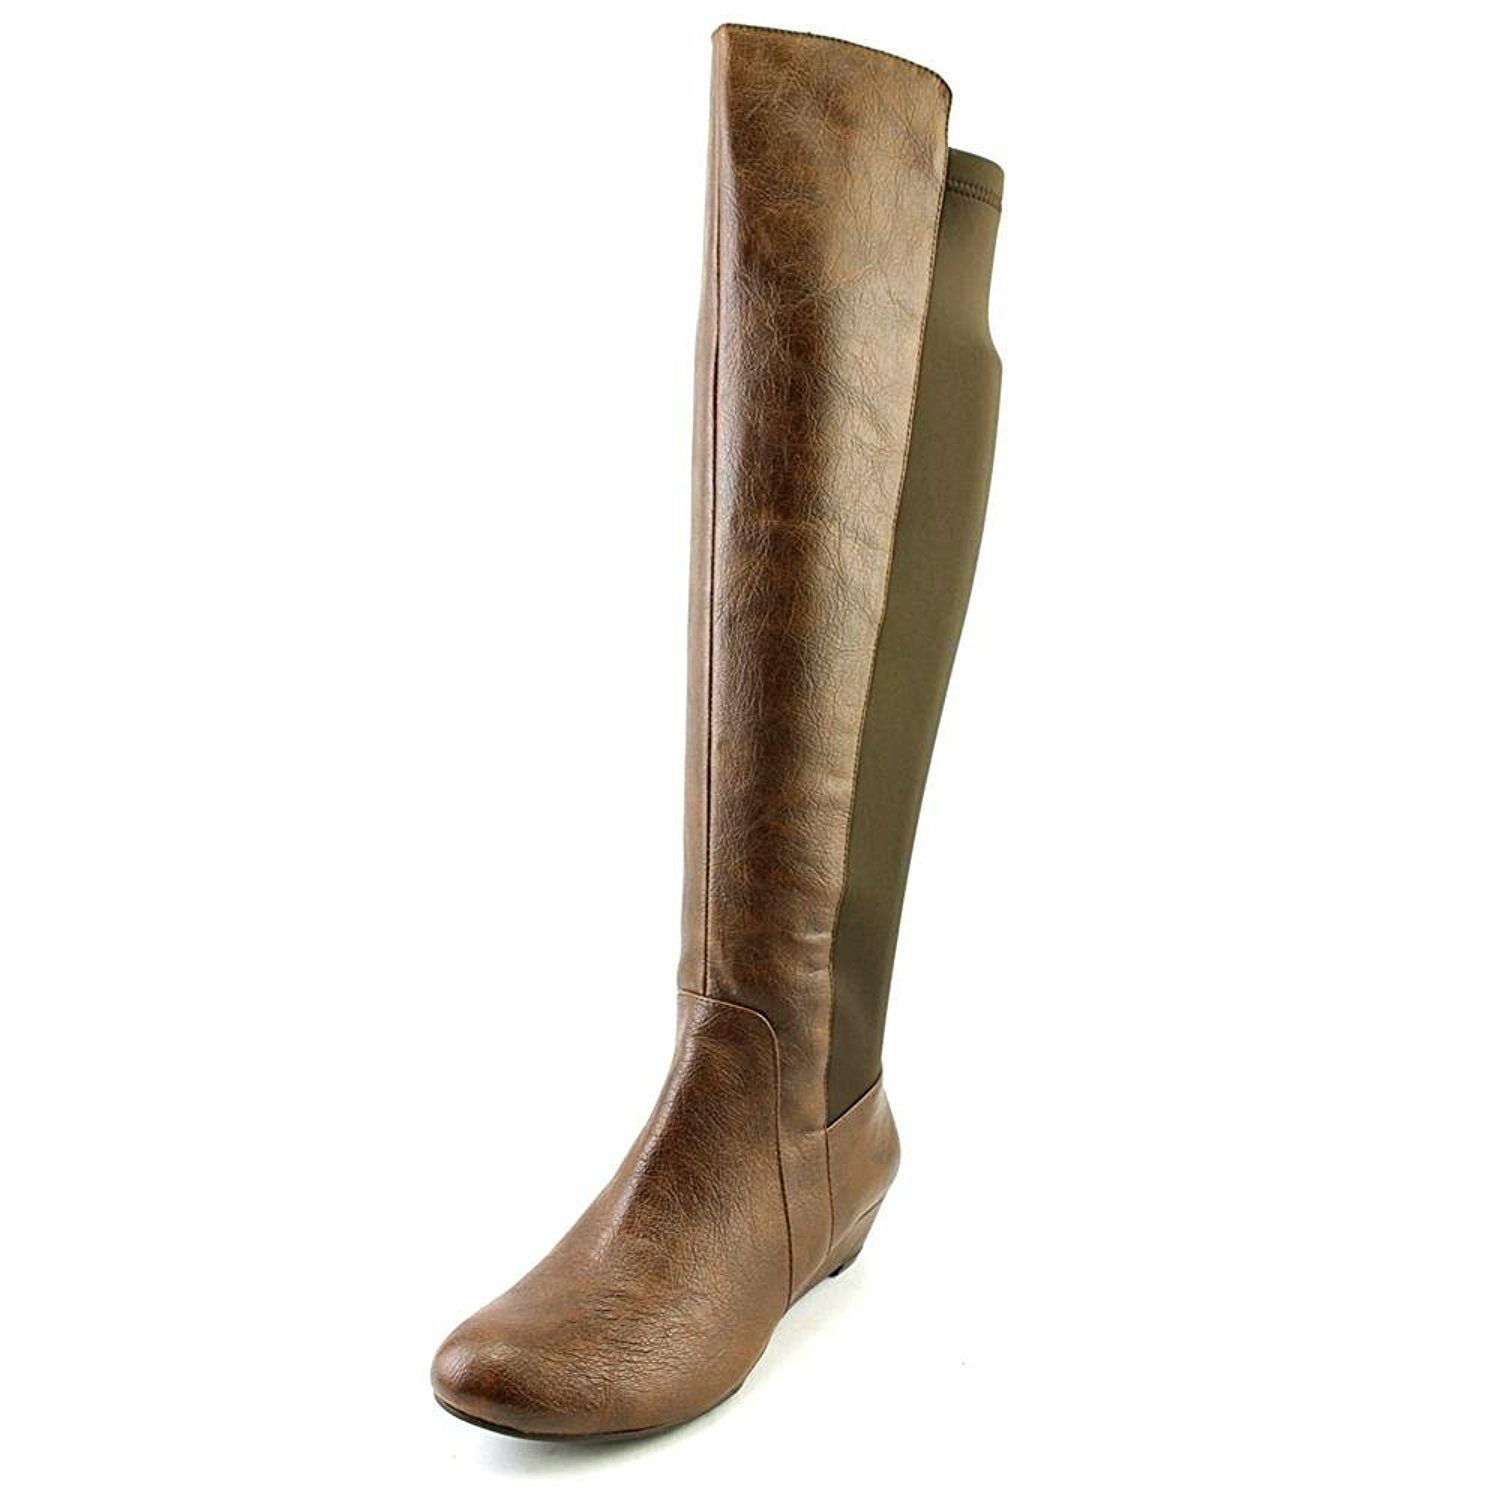 Jessica Simpson Womens Joline Almond Toe Knee High Fashion Boots | eBay1500 x 1500